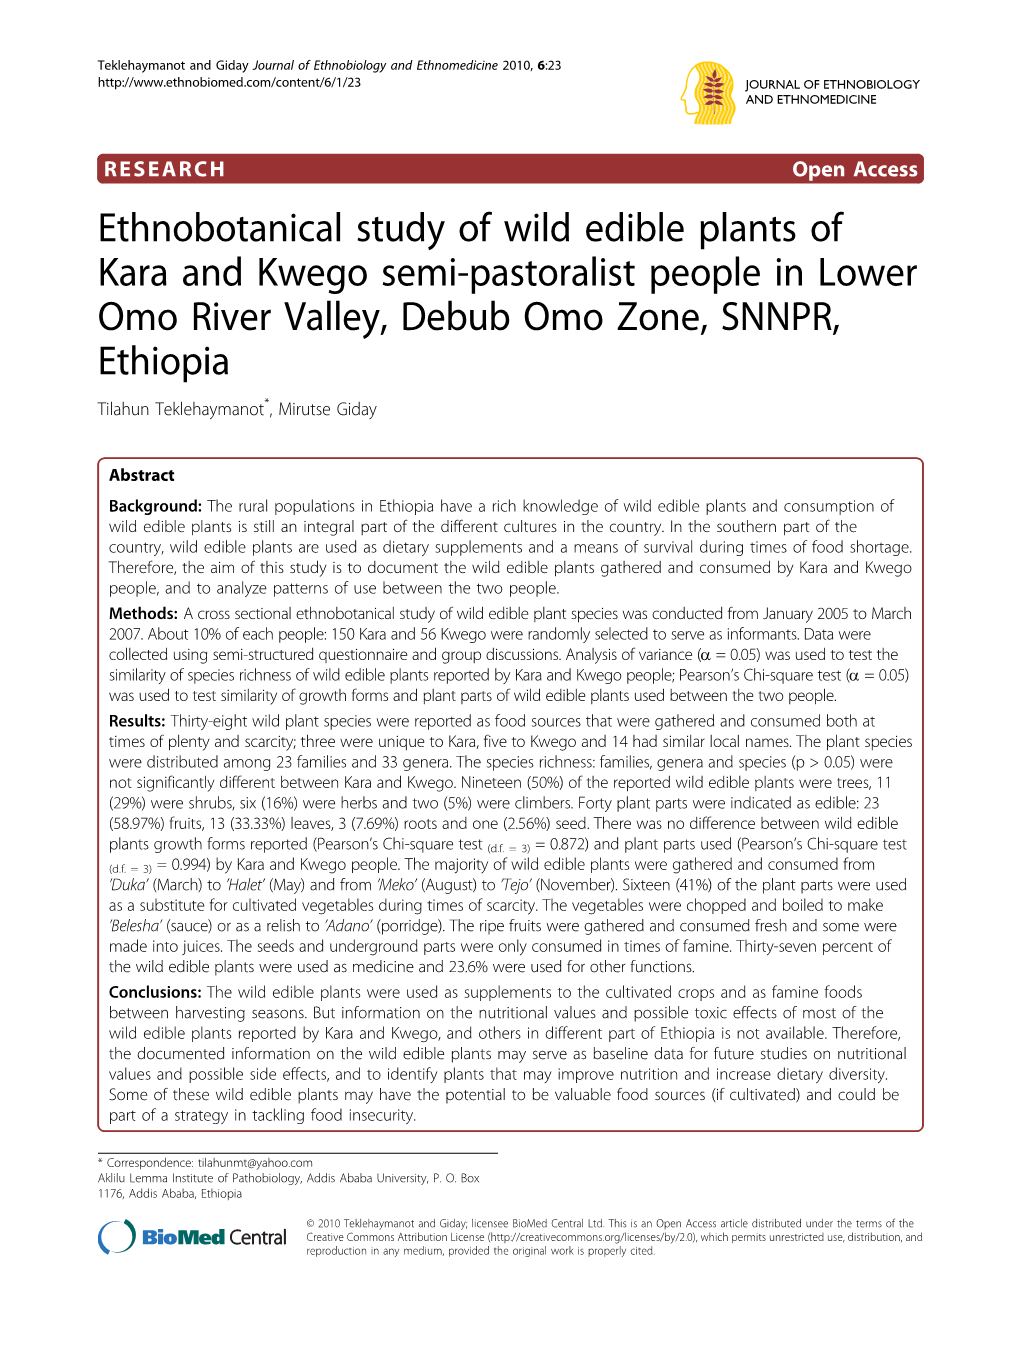 Ethnobotanical Study of Wild Edible Plants of Kara And